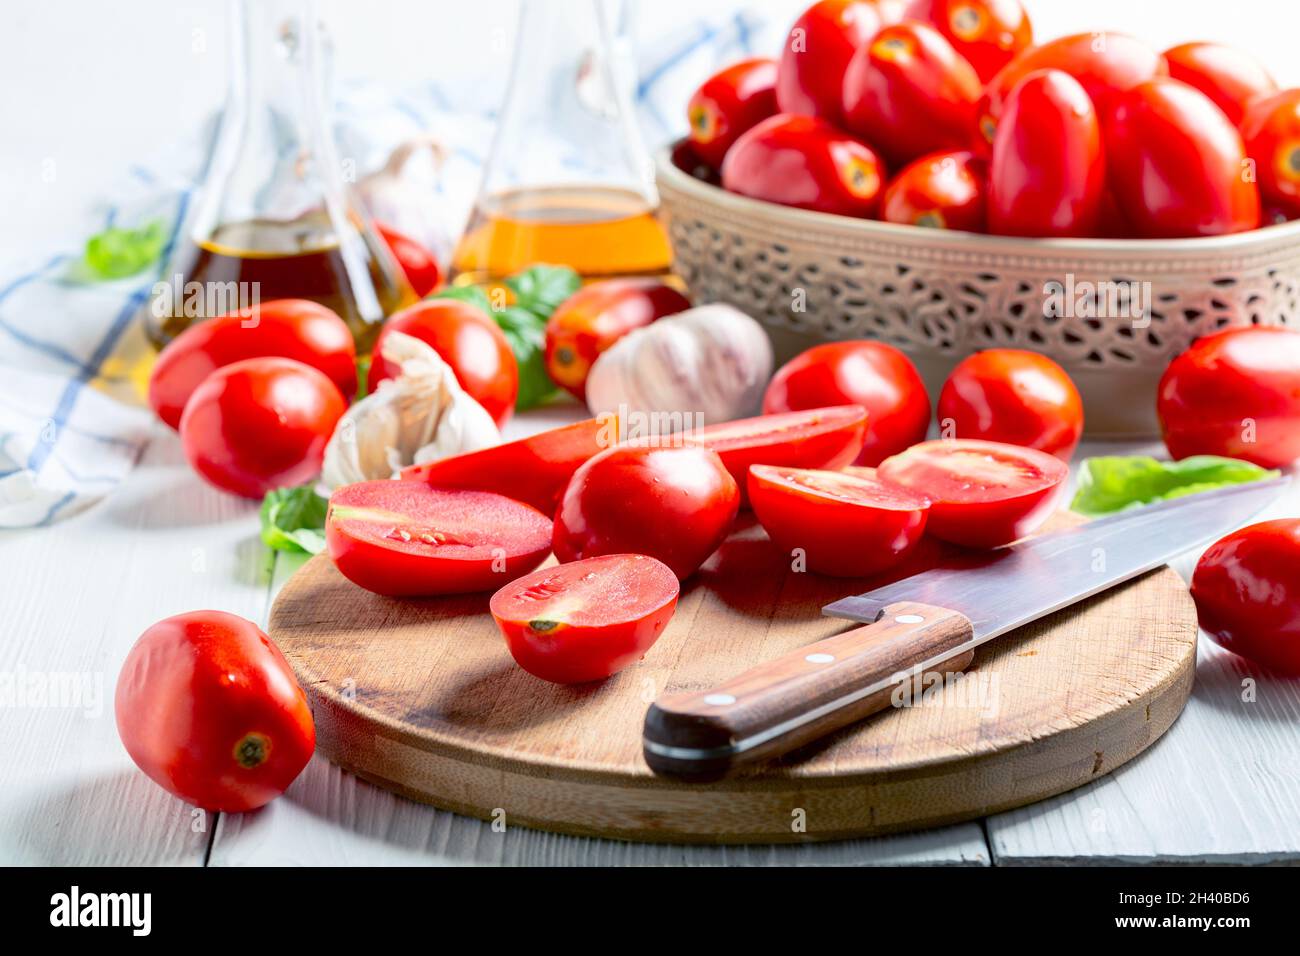 Halves of ripe tomatoes. Stock Photo